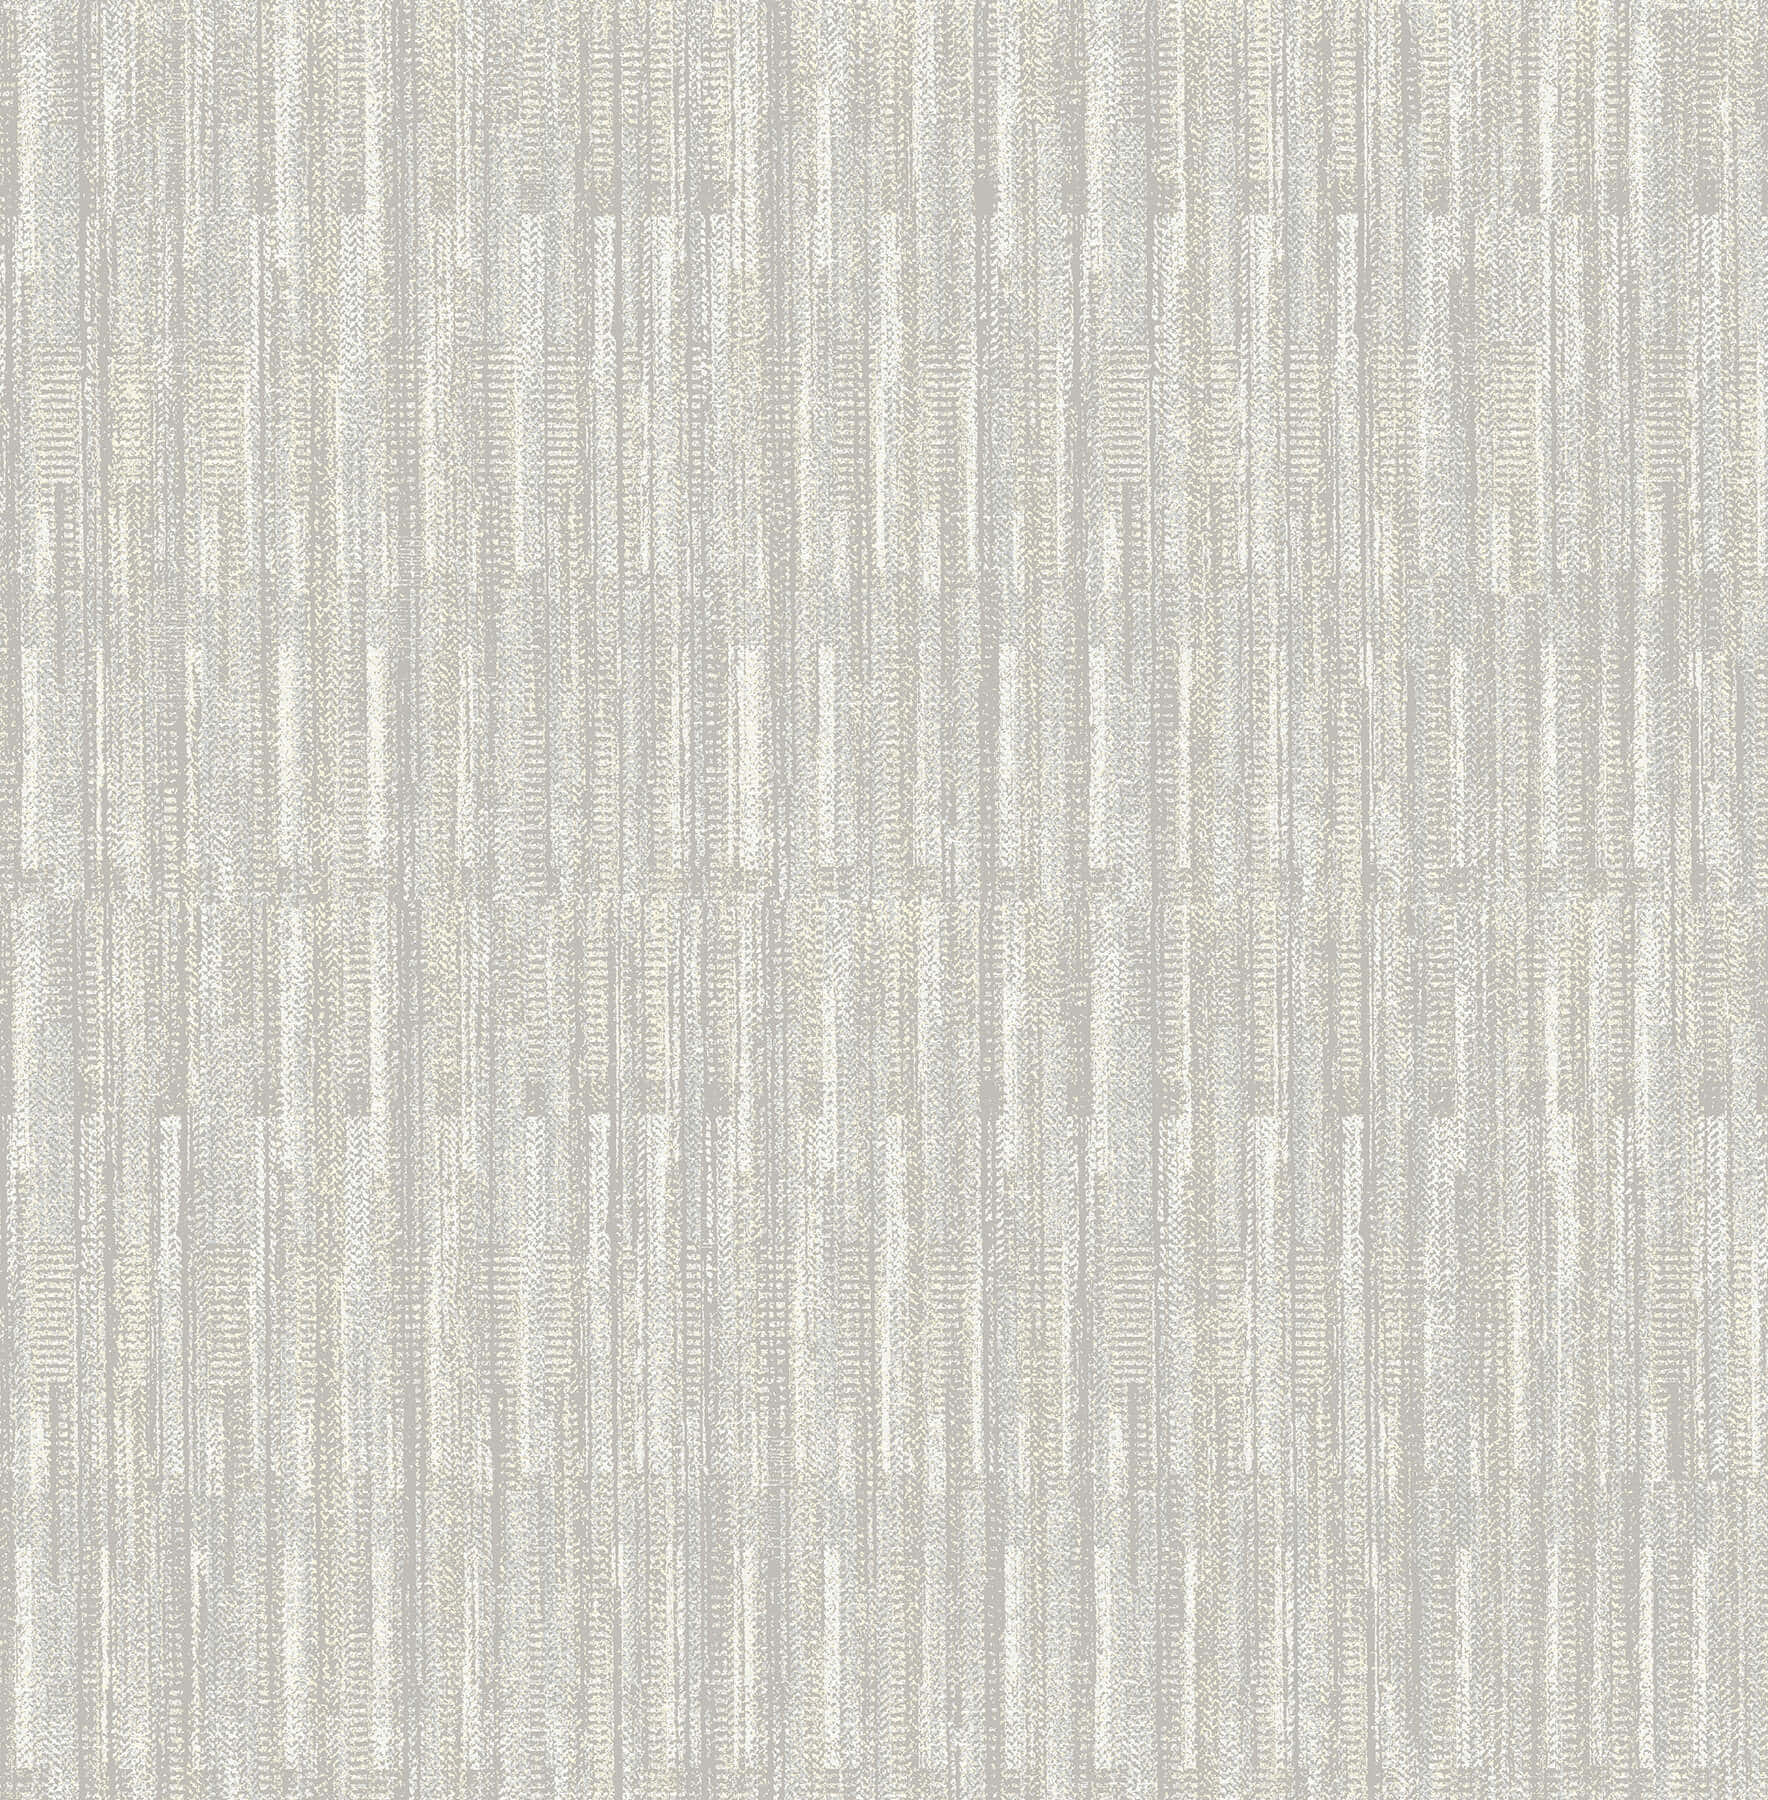 Elegant And Luxury Carpet Texture Wallpaper